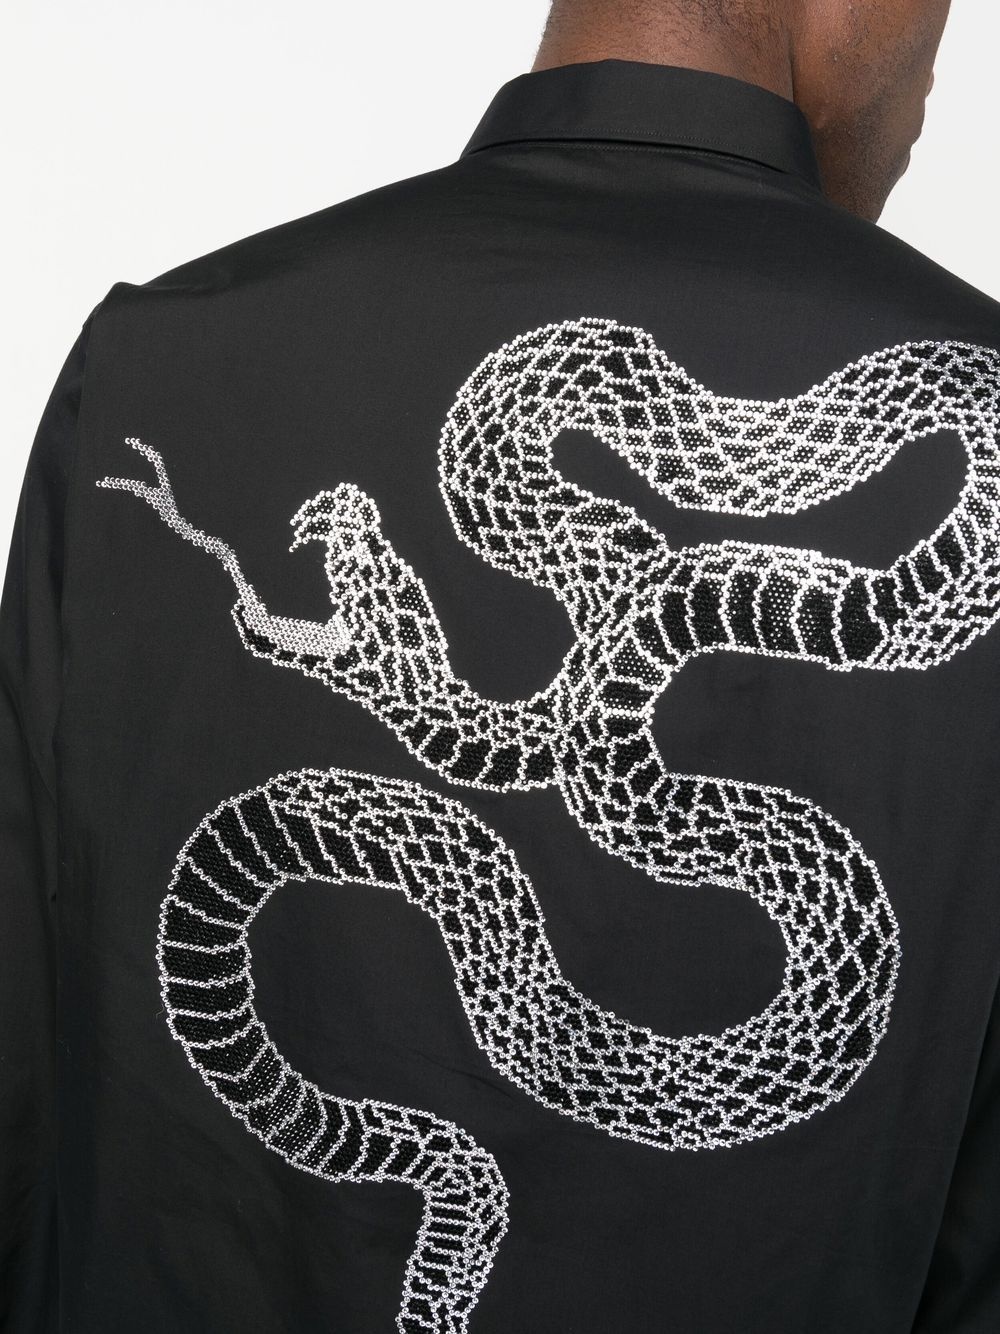 snake detail long-sleeve shirt - 5